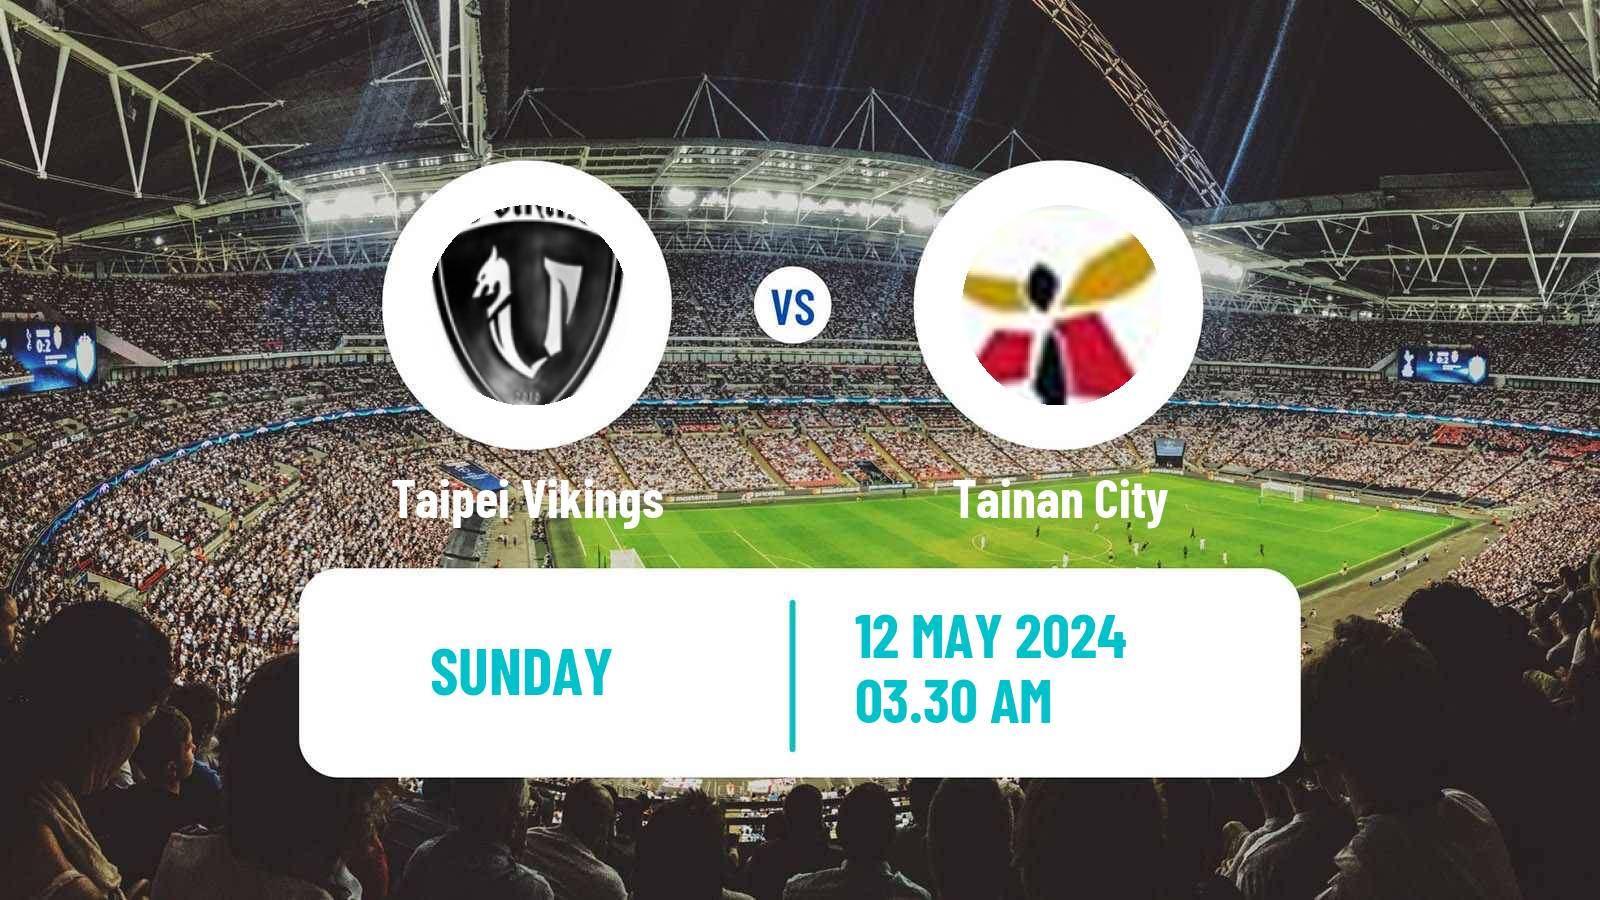 Soccer Taiwan Premier League Taipei Vikings - Tainan City